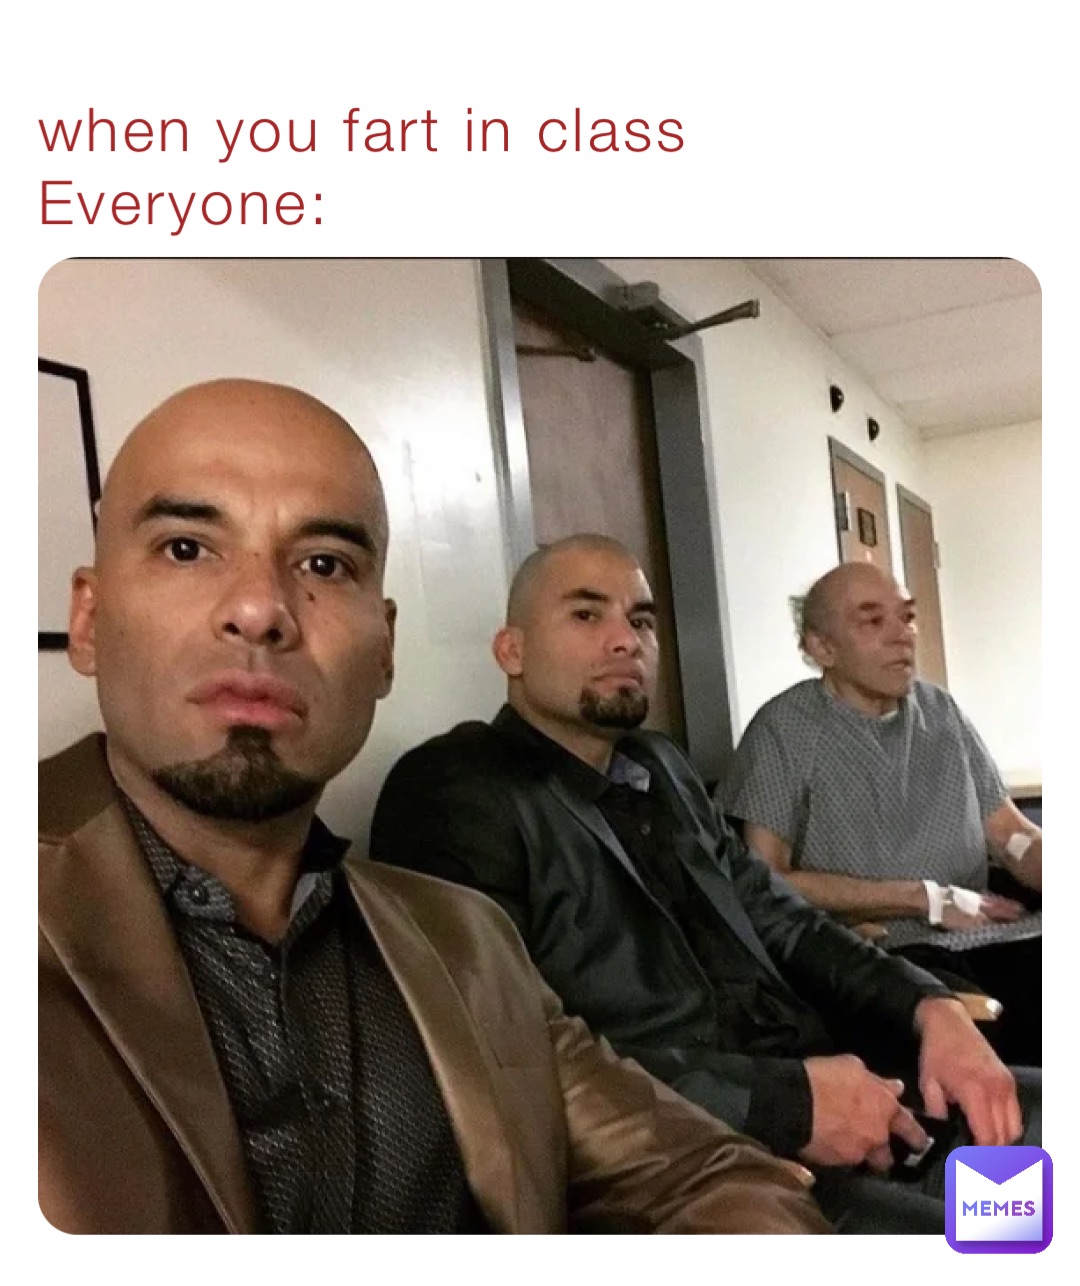 when you fart in class
Everyone: